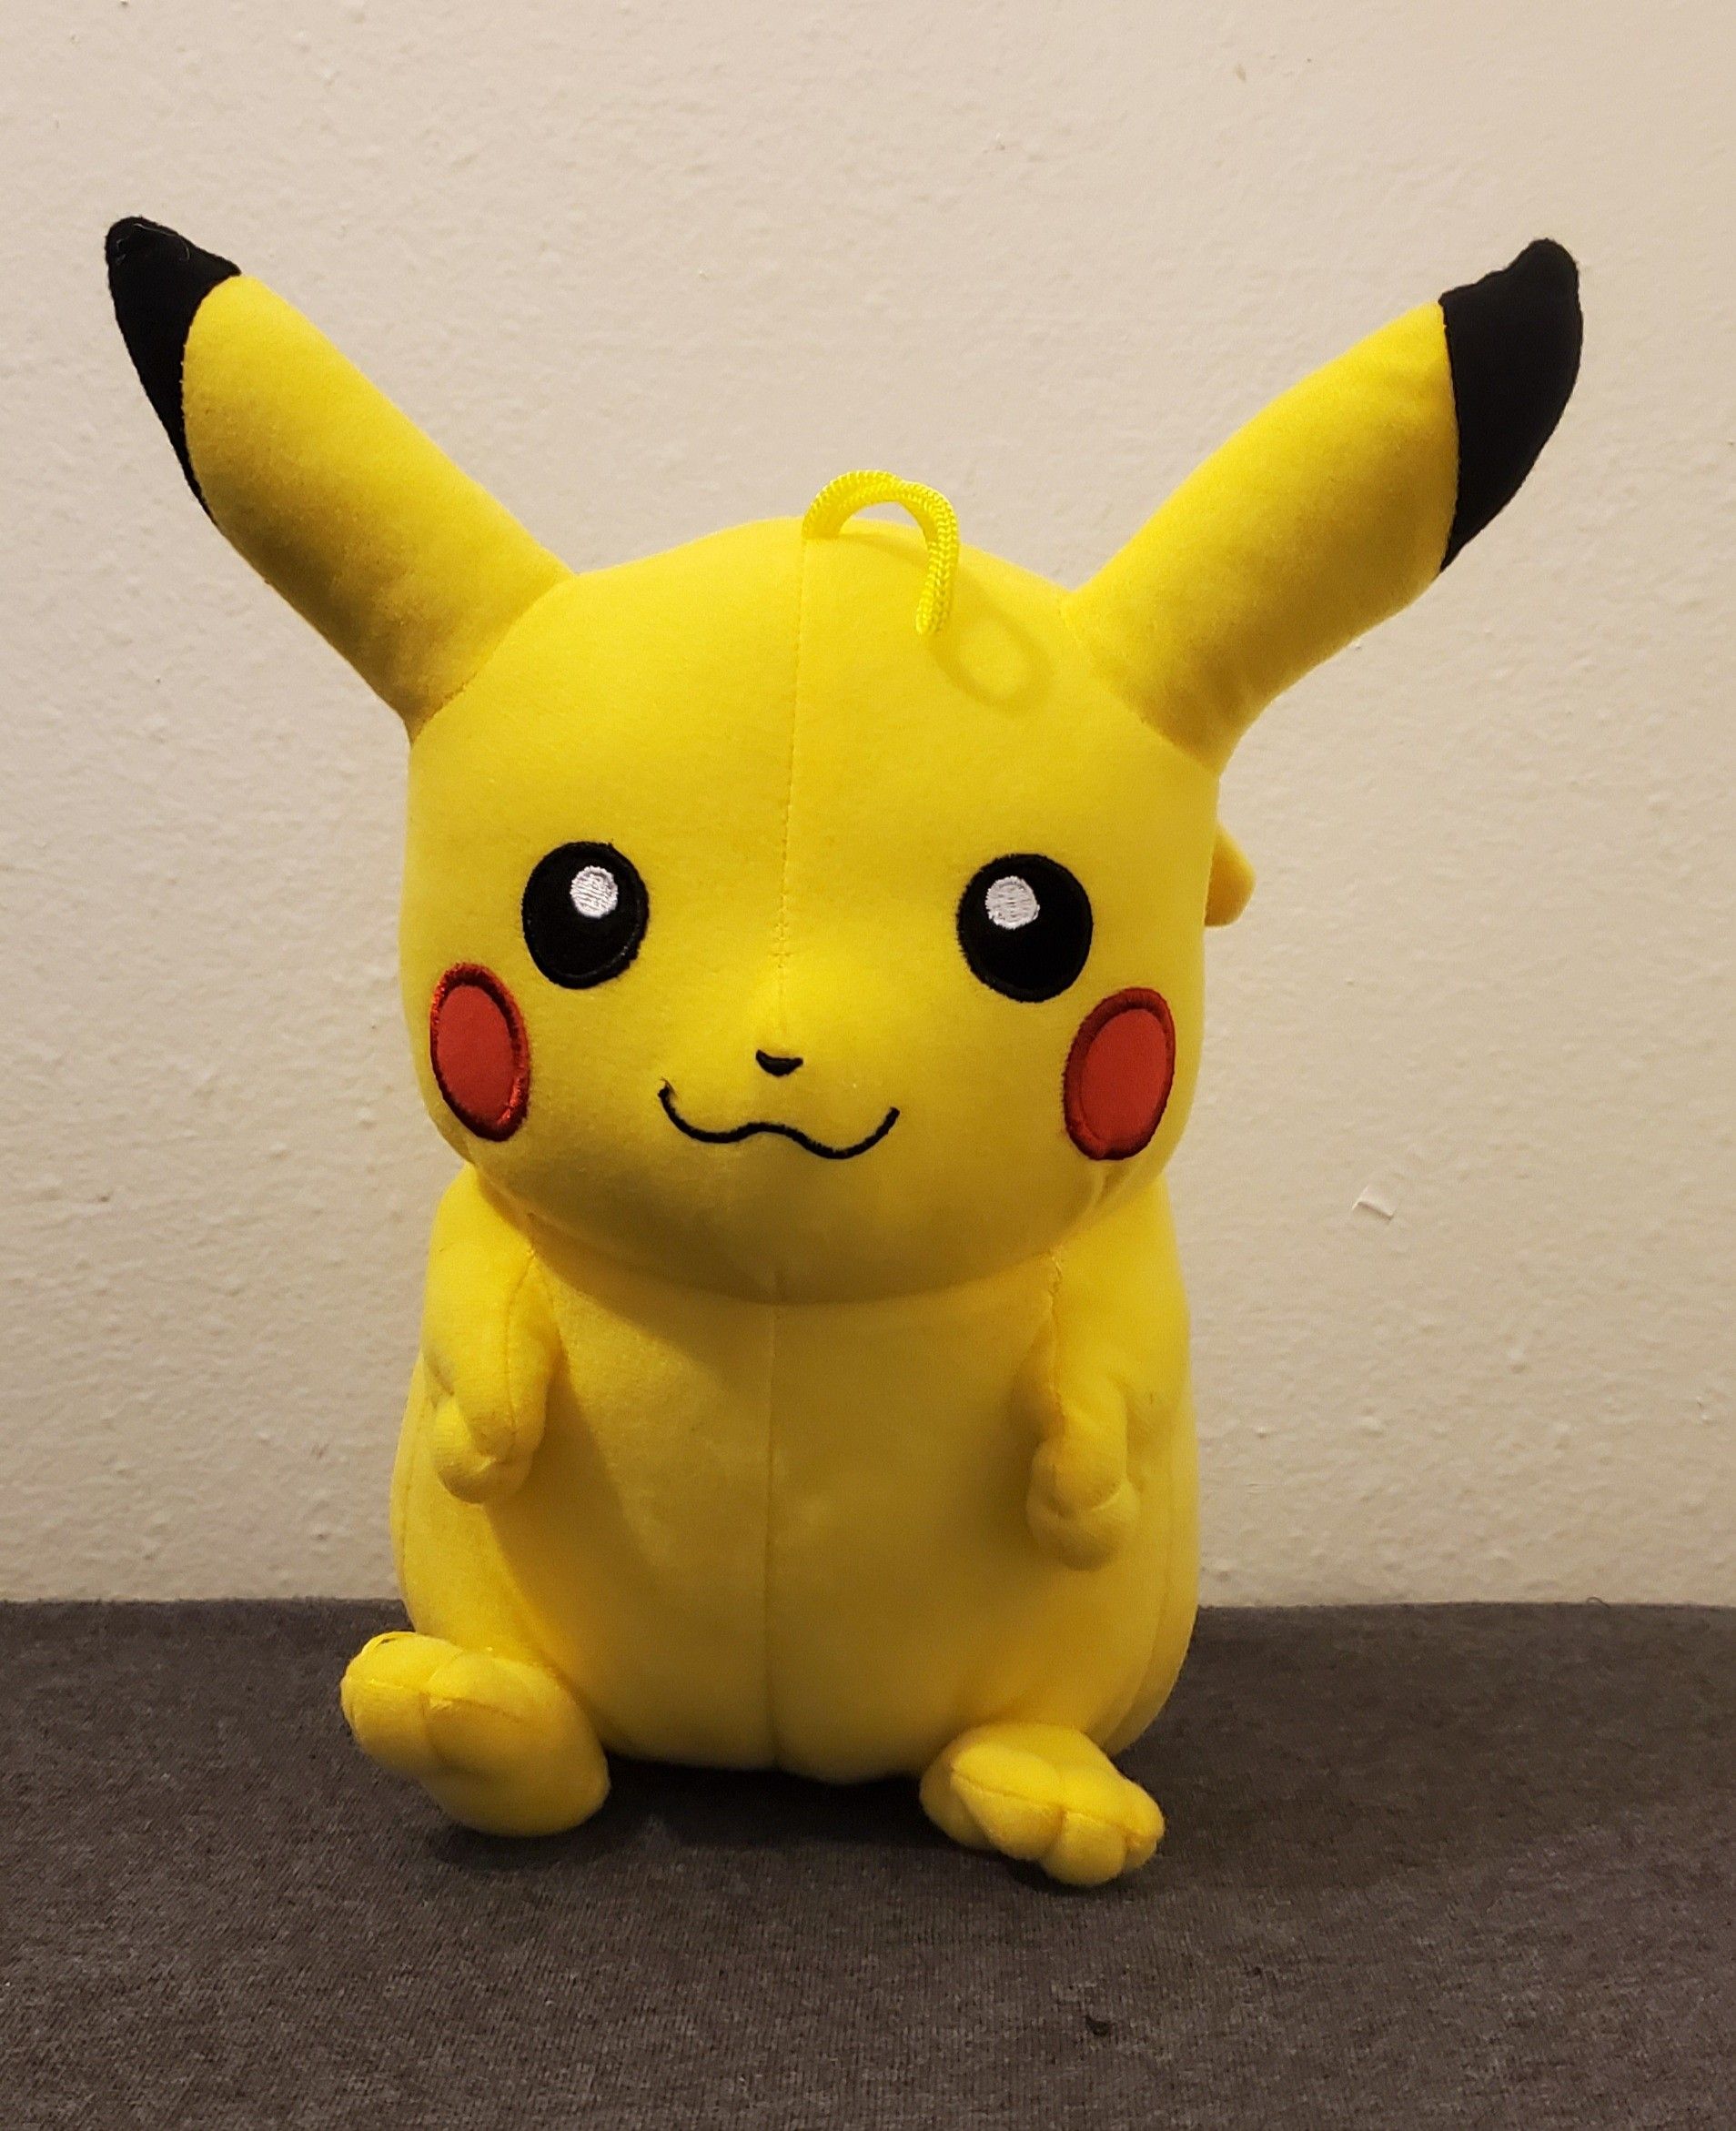 10" Pokémon Pikachu Plush